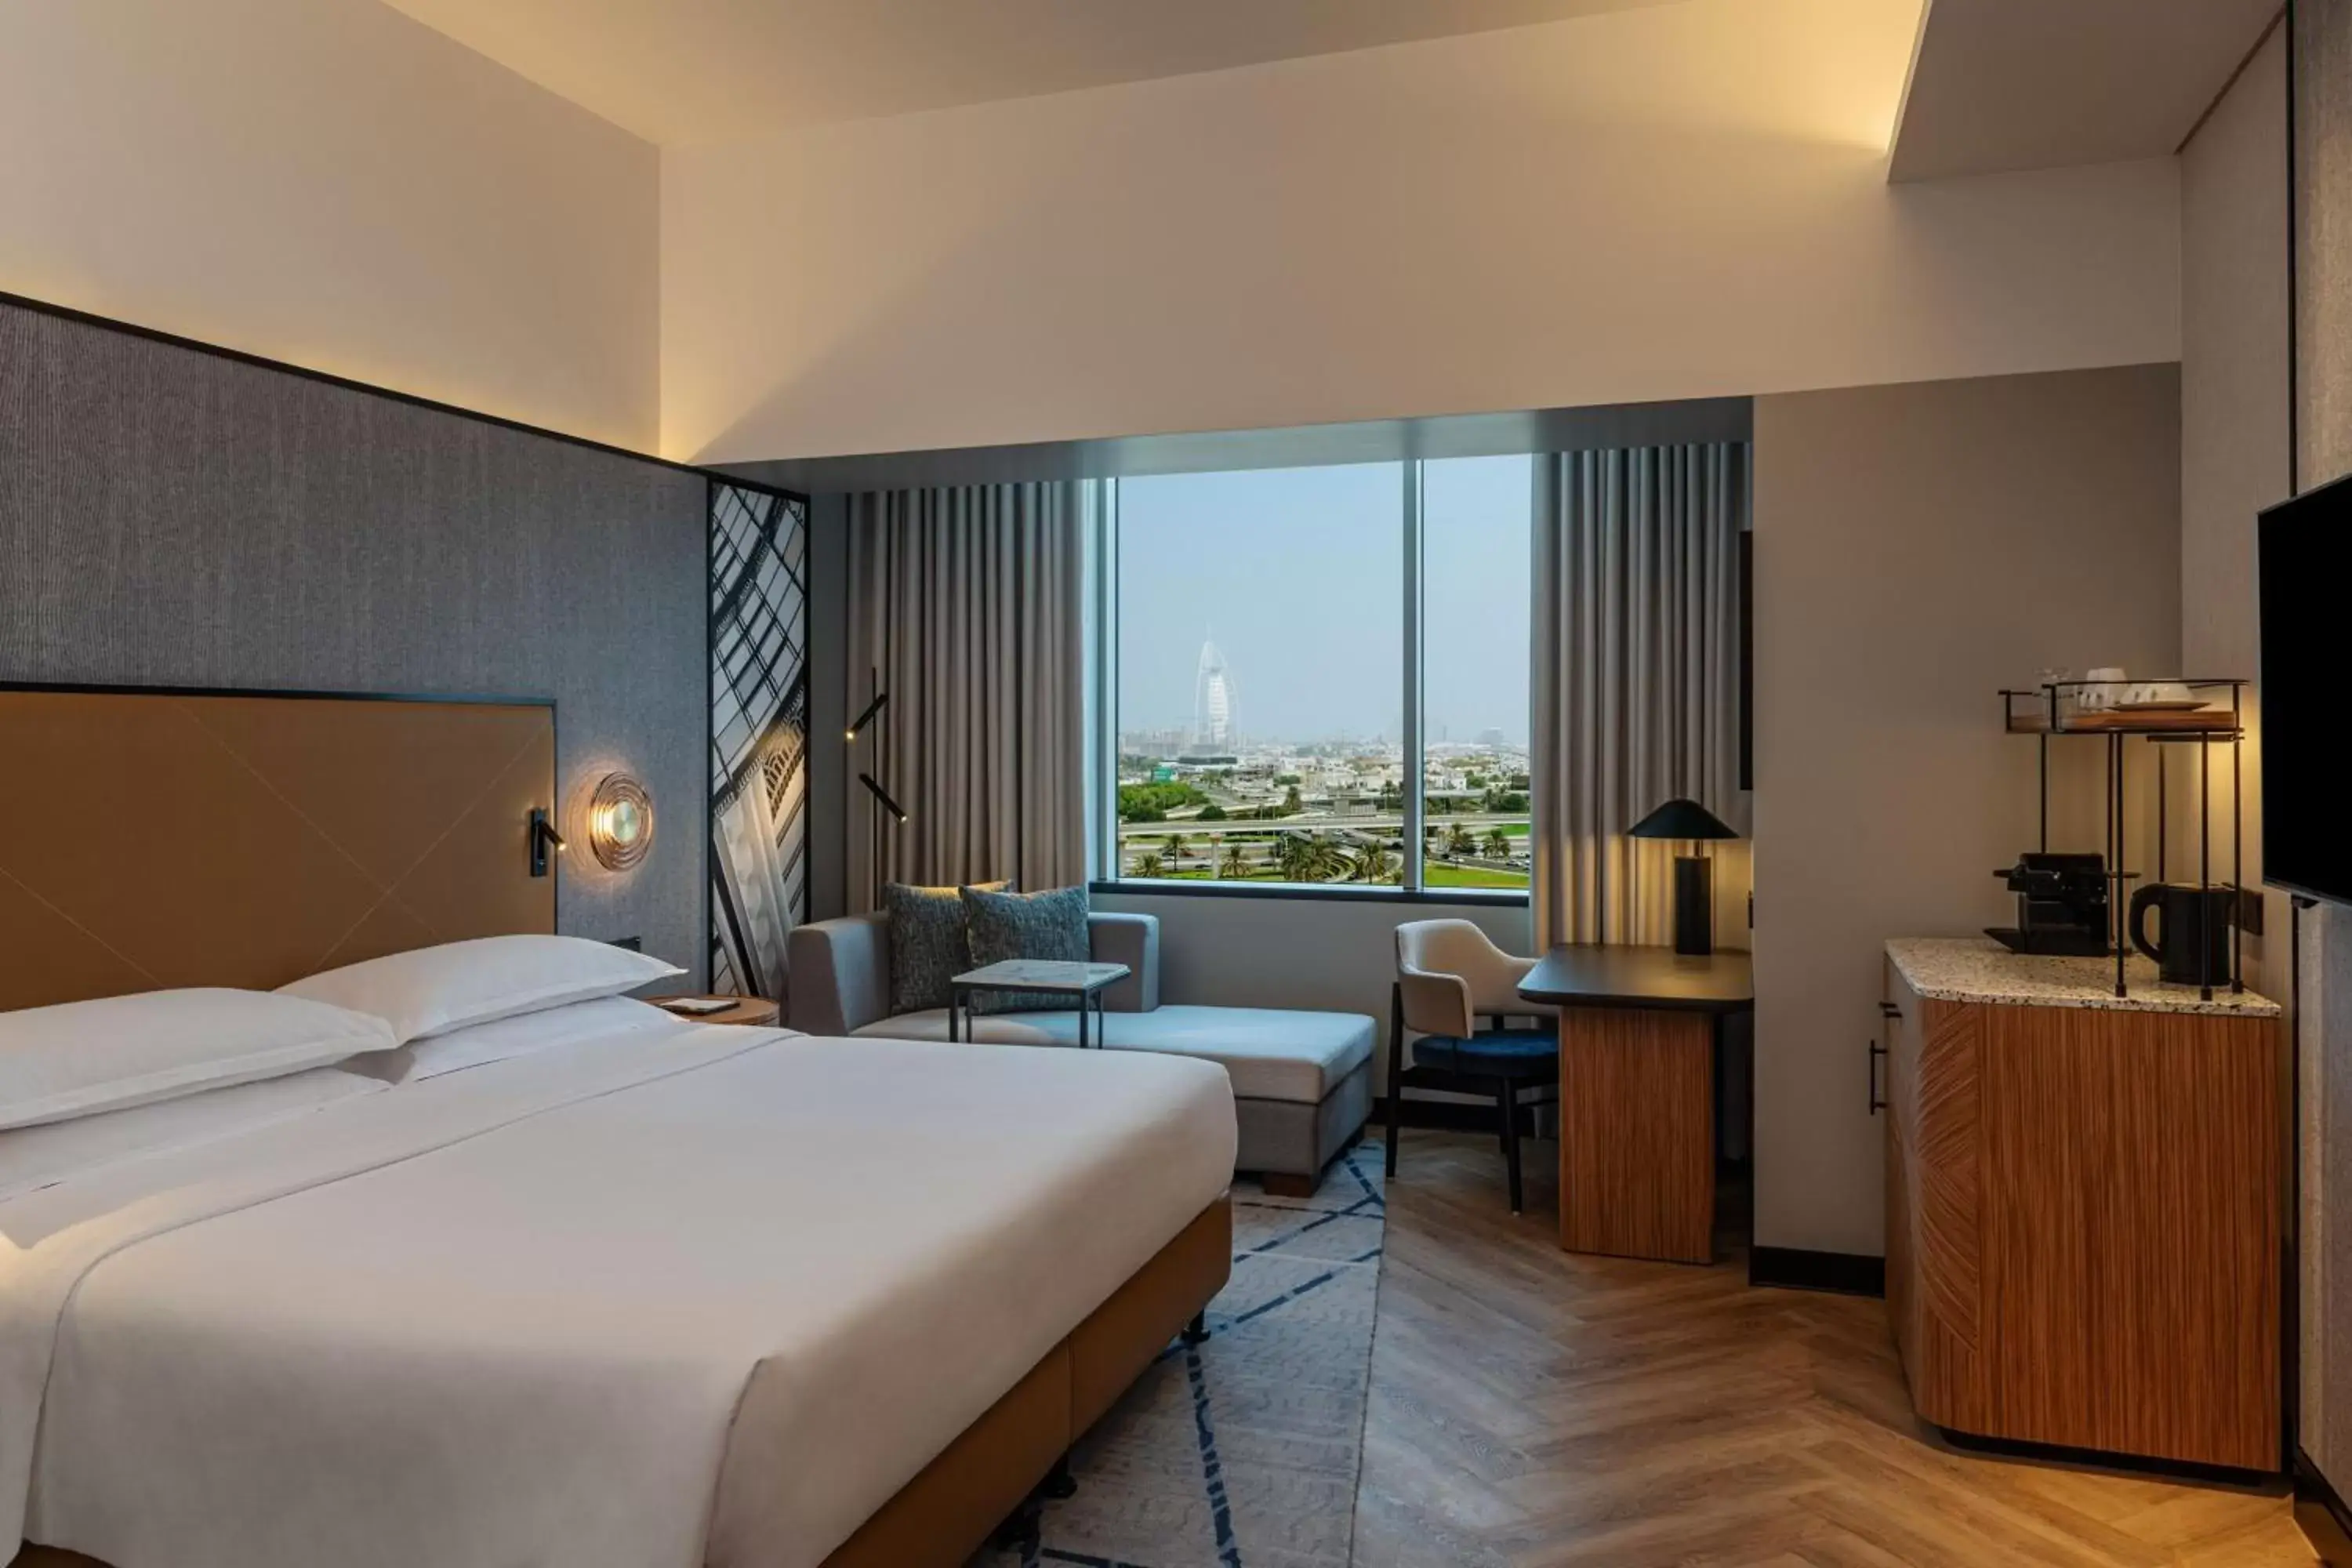 Bedroom in Sheraton Mall of the Emirates Hotel, Dubai